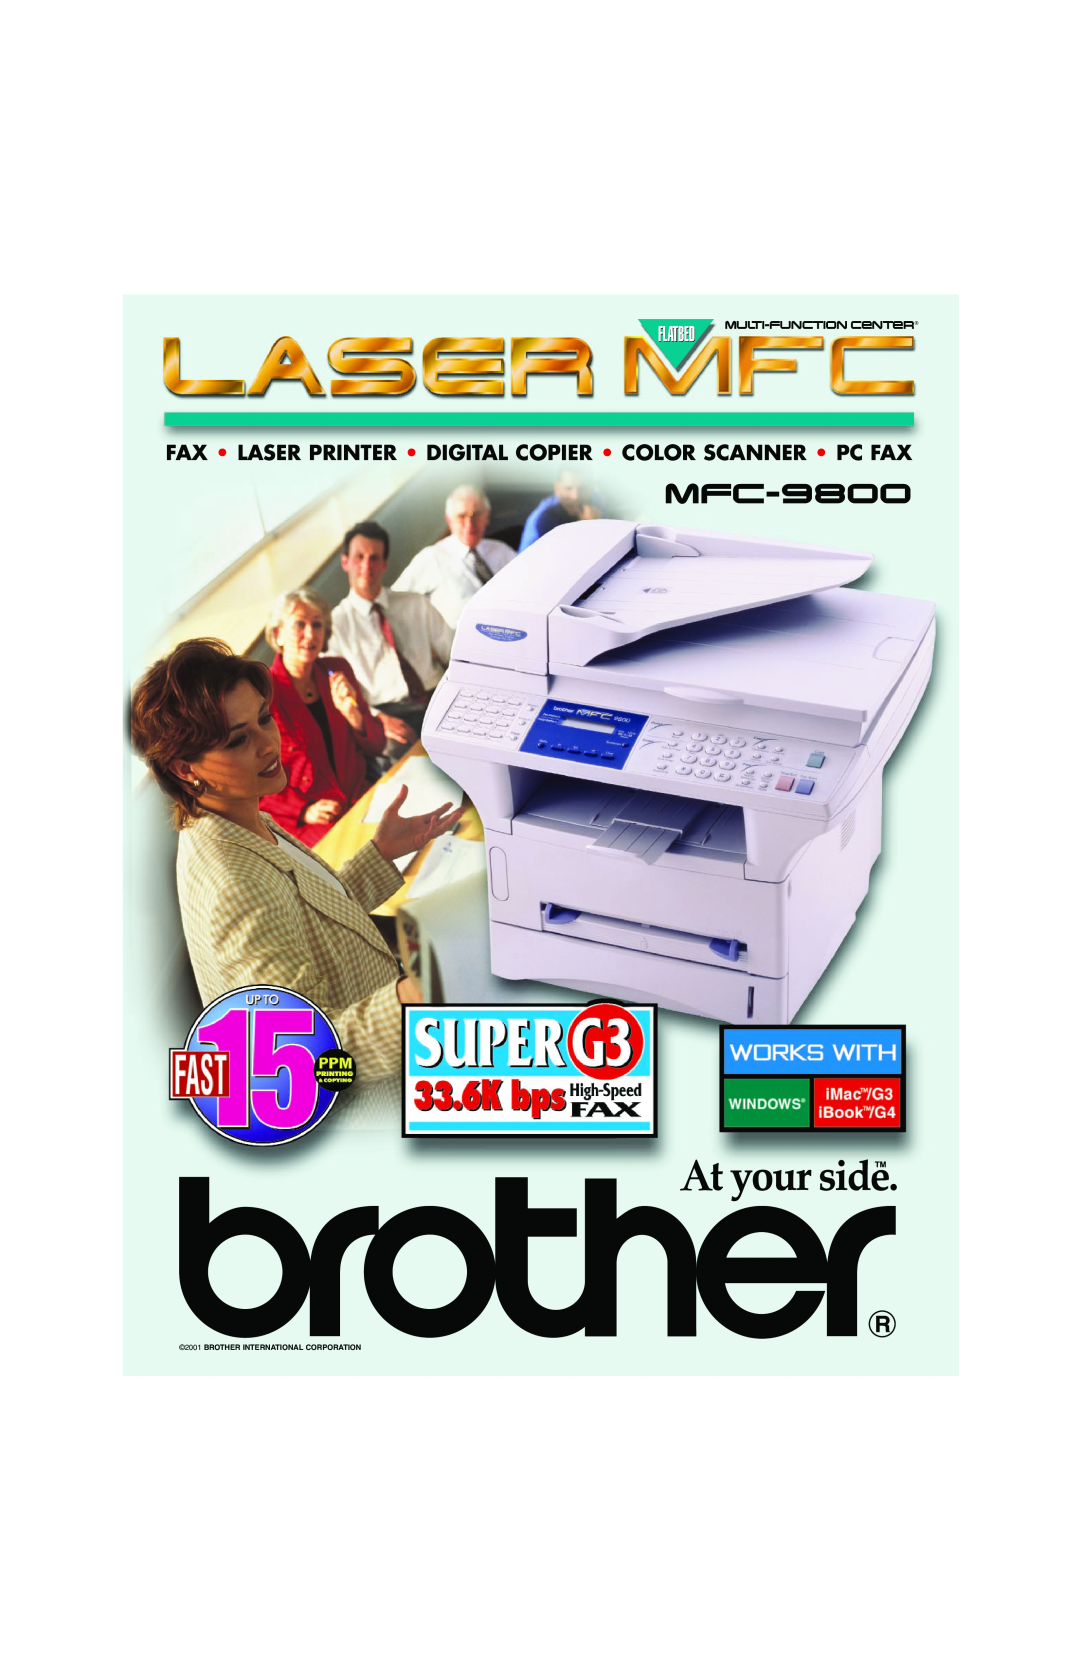 Brother MFC-9800 manual Fax Laser Printer Digital Copier Color Scanner Pc Fax, Flatbed, Multi-Function Center 